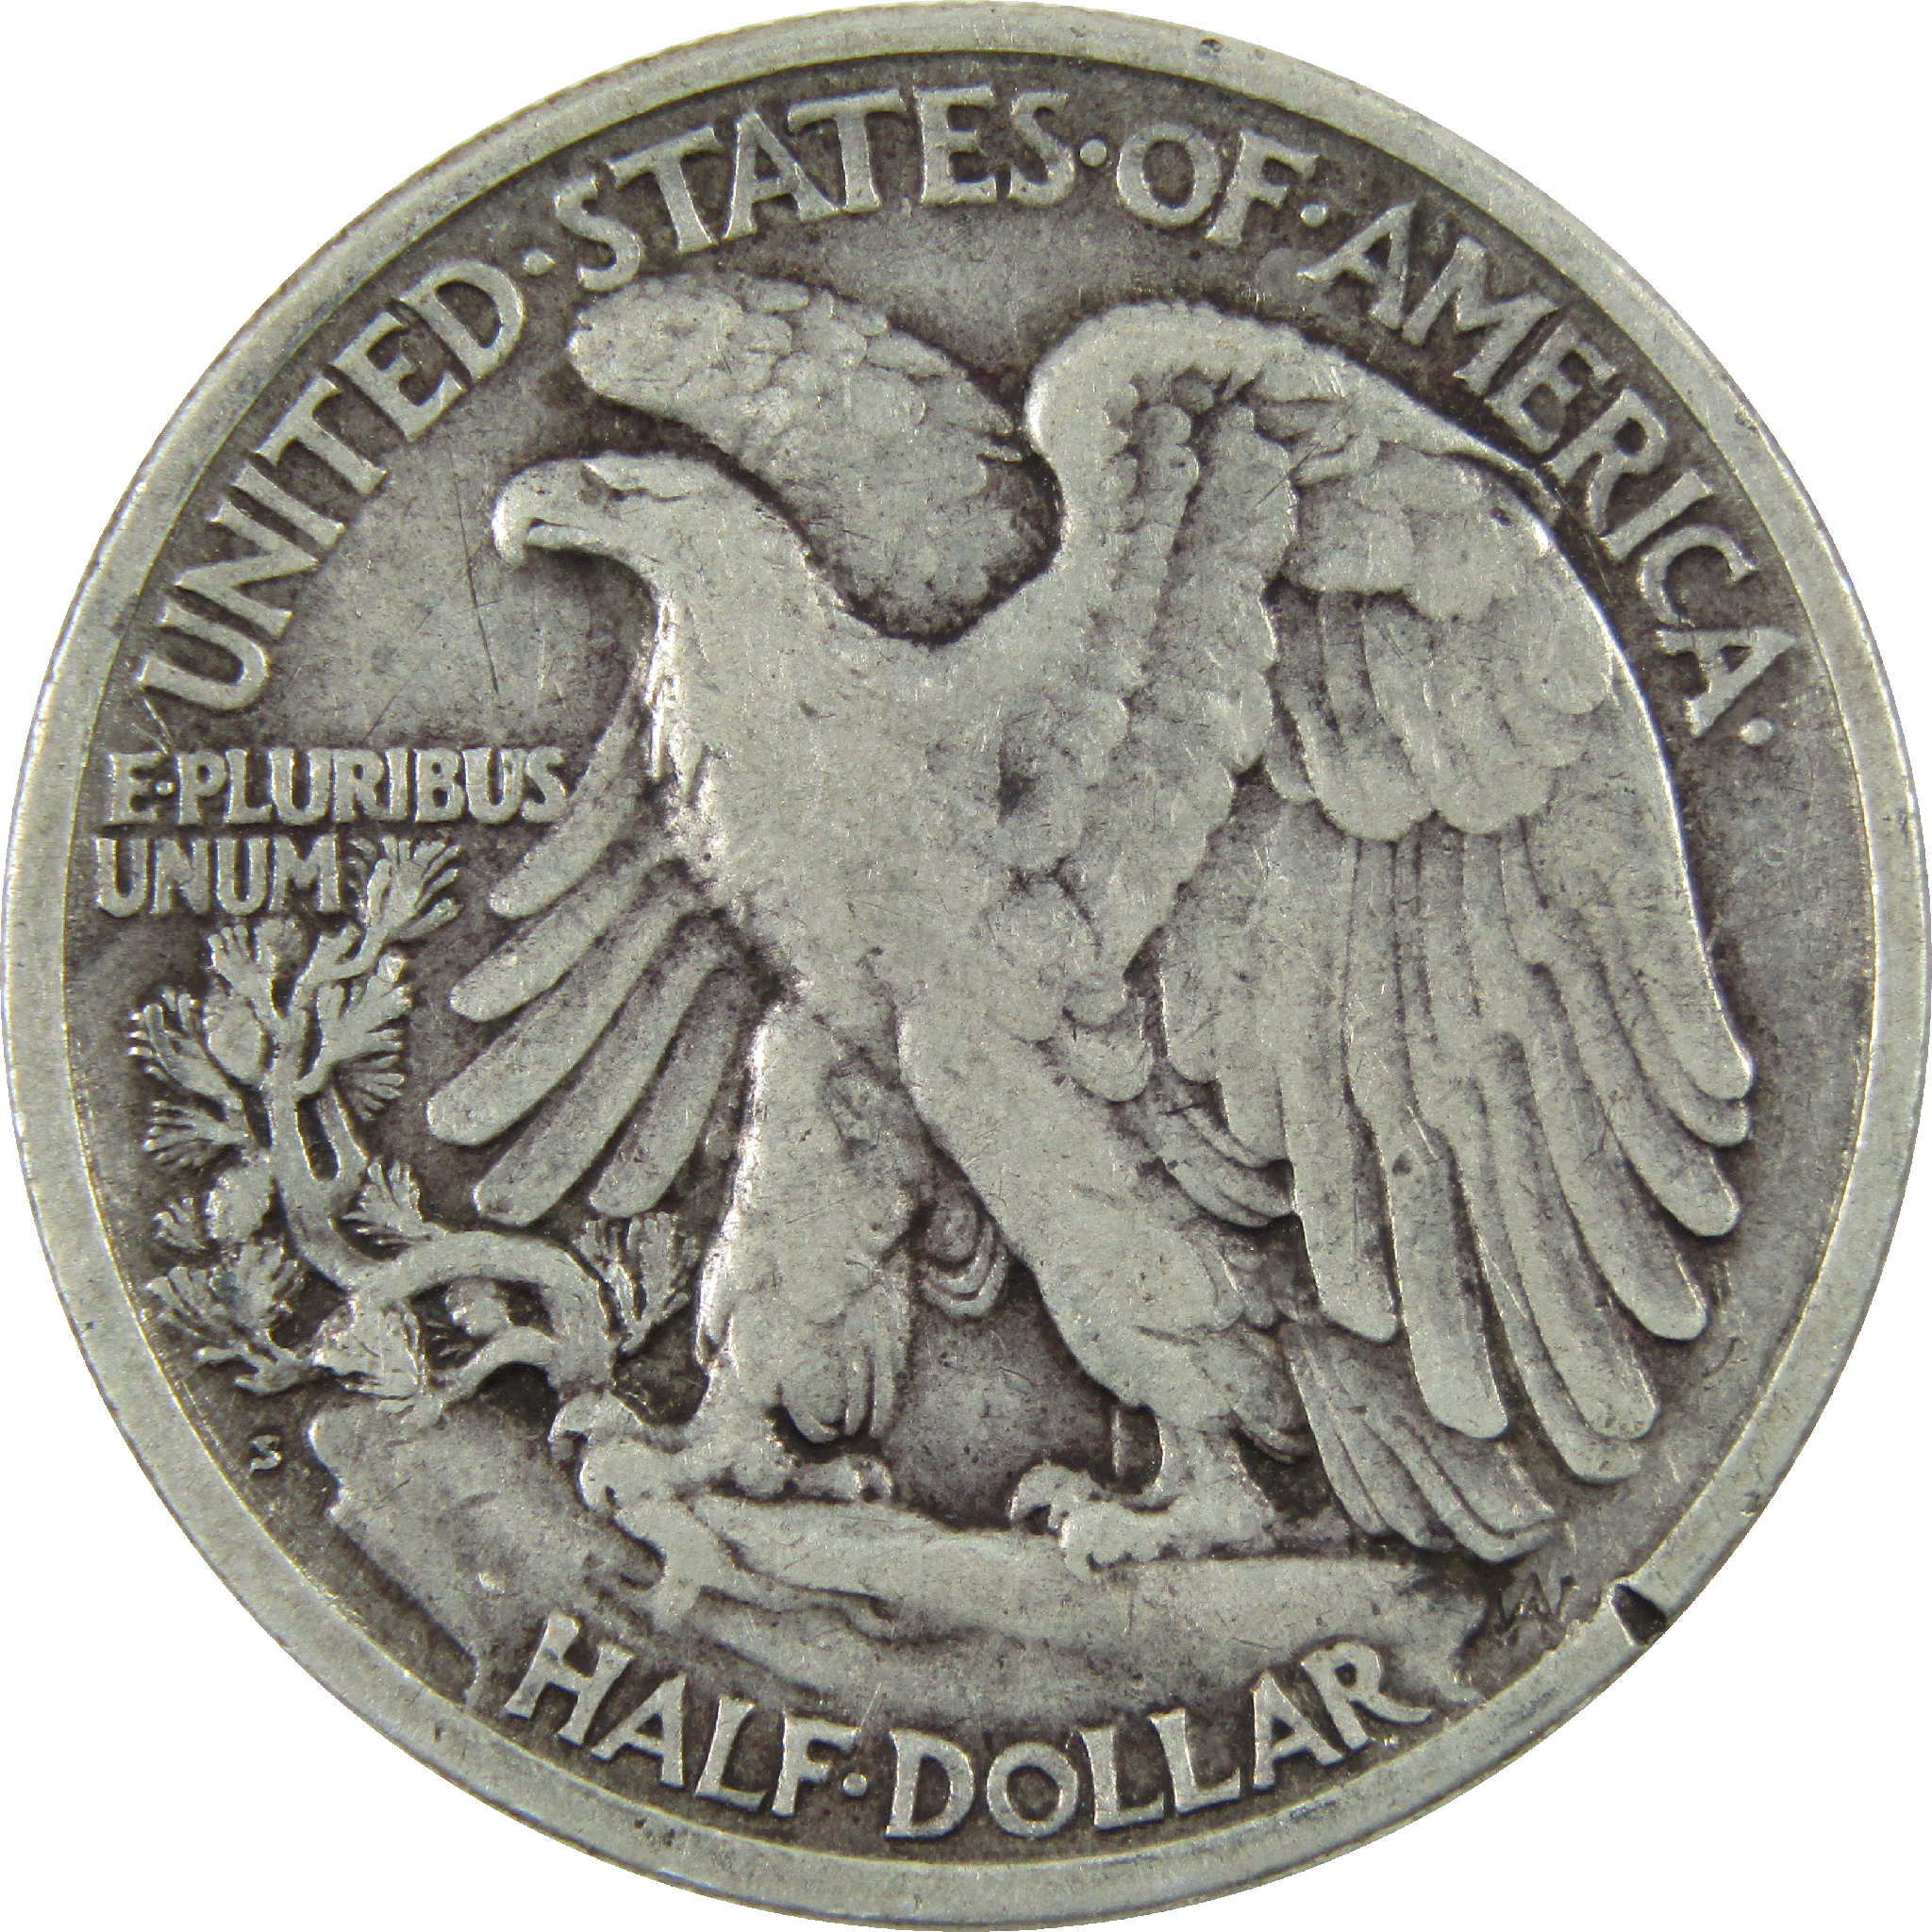 1920 S Liberty Walking Half Dollar VF Very Fine Silver 50c SKU:I11886